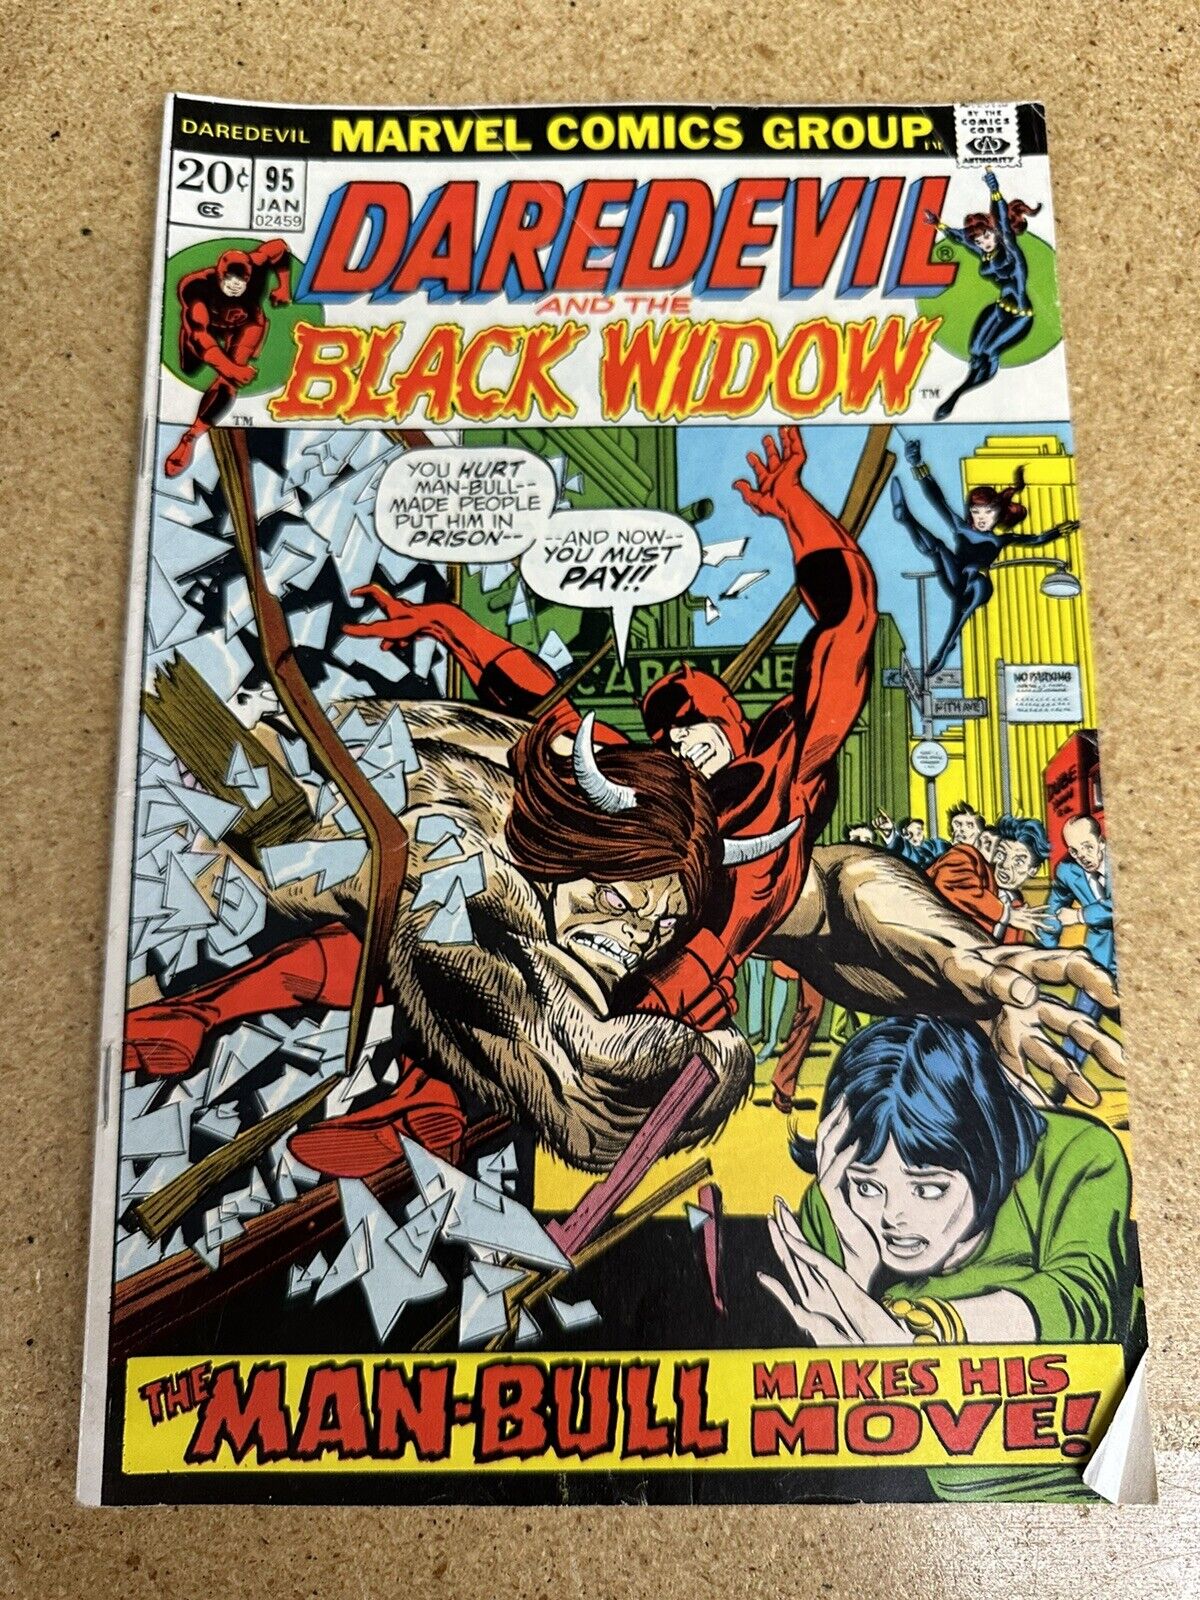 Daredevil and the Black Widow 95 (Daredevil #95) 1974 Marvel Comics